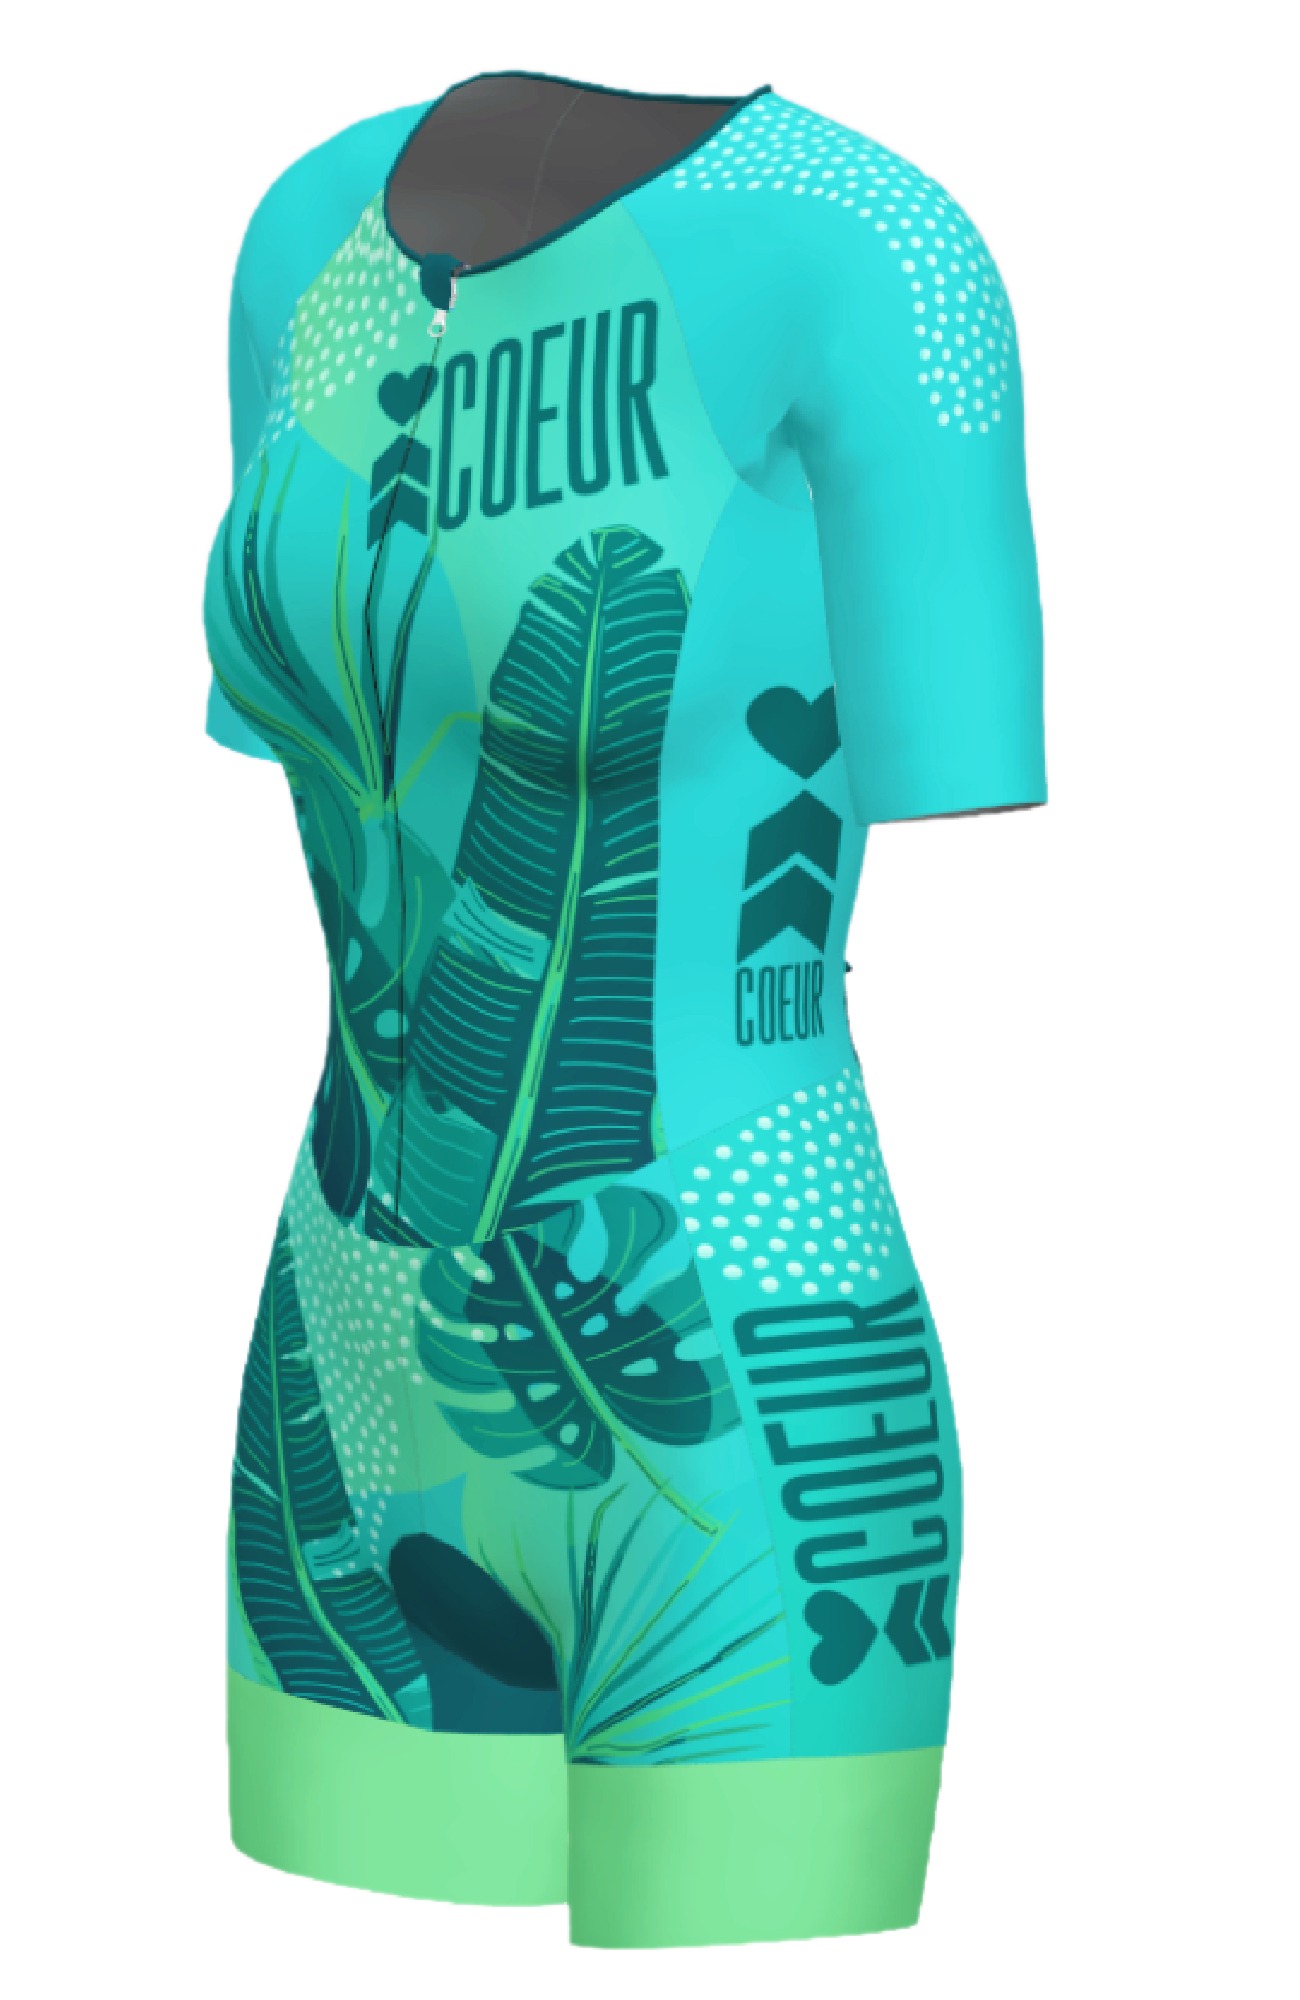 Coeur Sports Zele sleeved tri suit PRESALE! Aloha 23 Zele Sleeved Triathlon Speedsuit